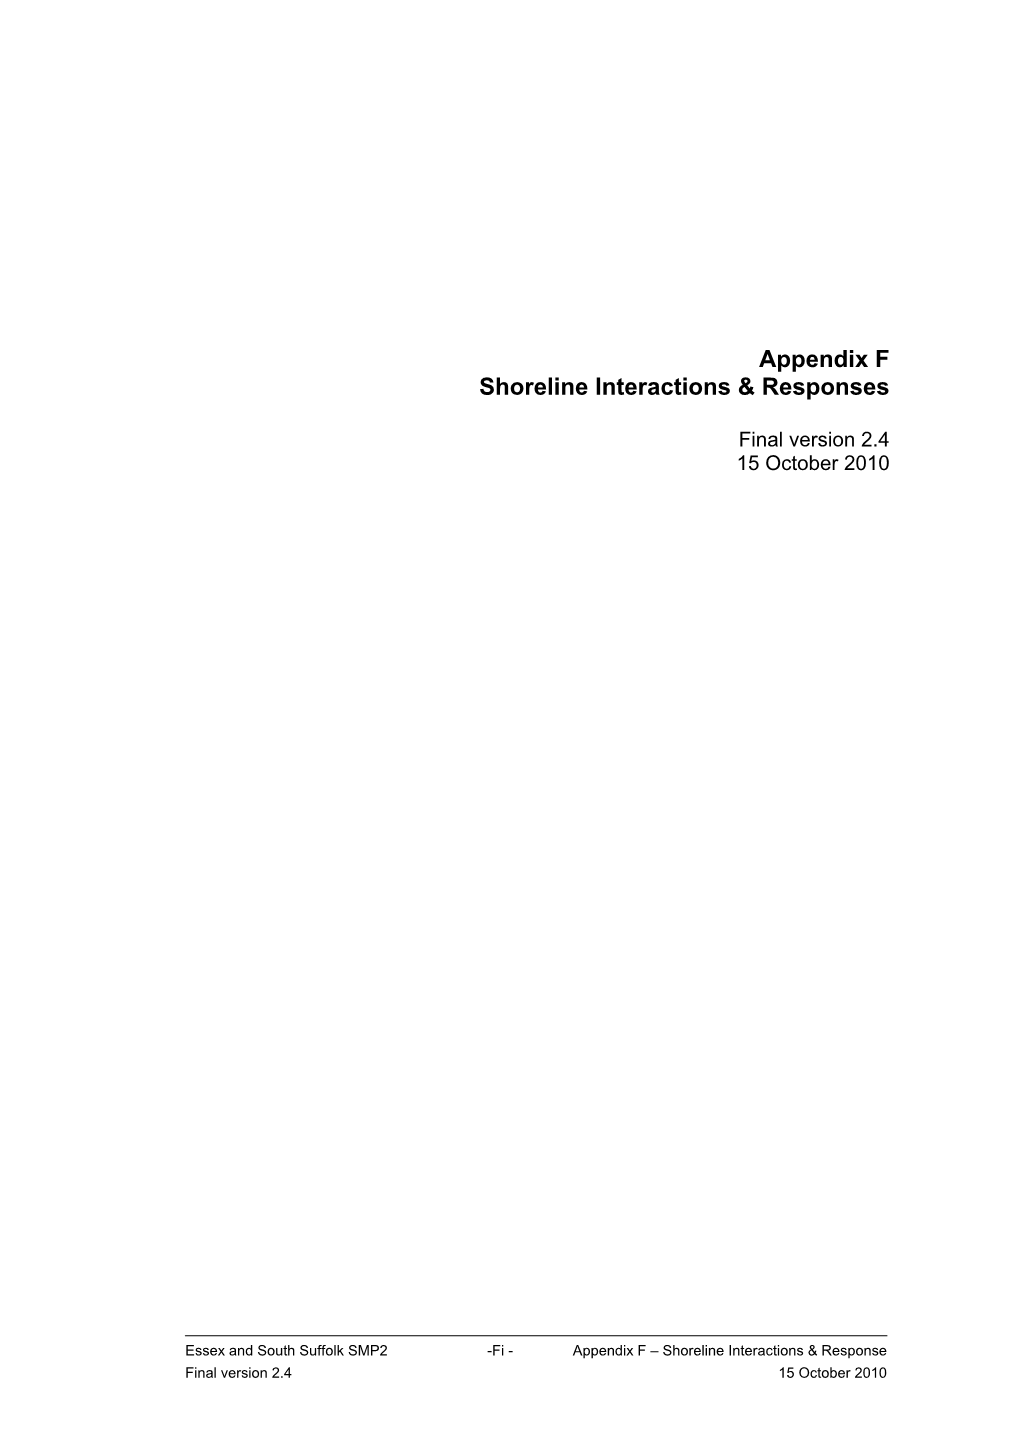 Appendix F – Shoreline Interactions & Response